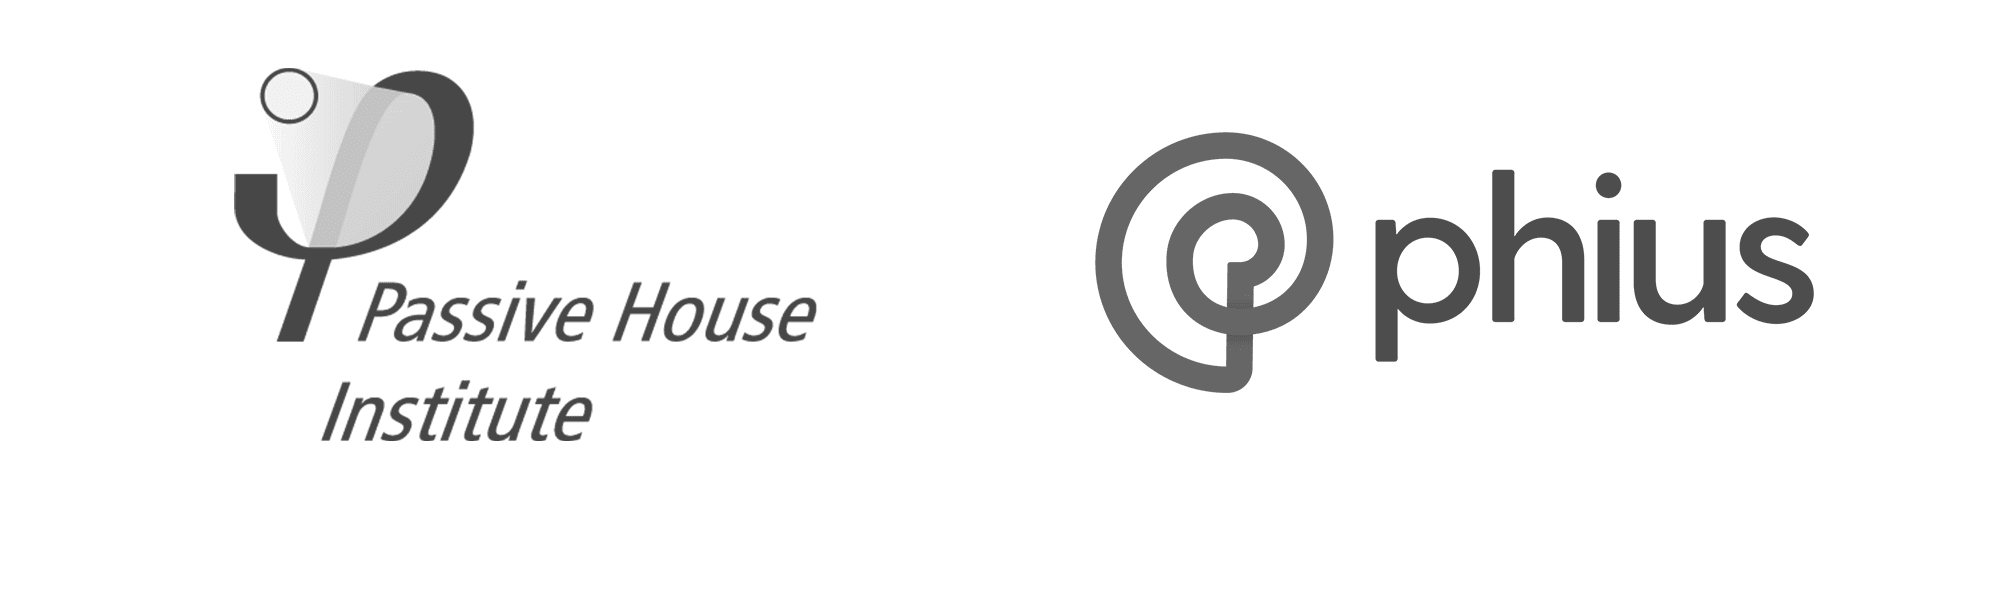 passive house phius logos